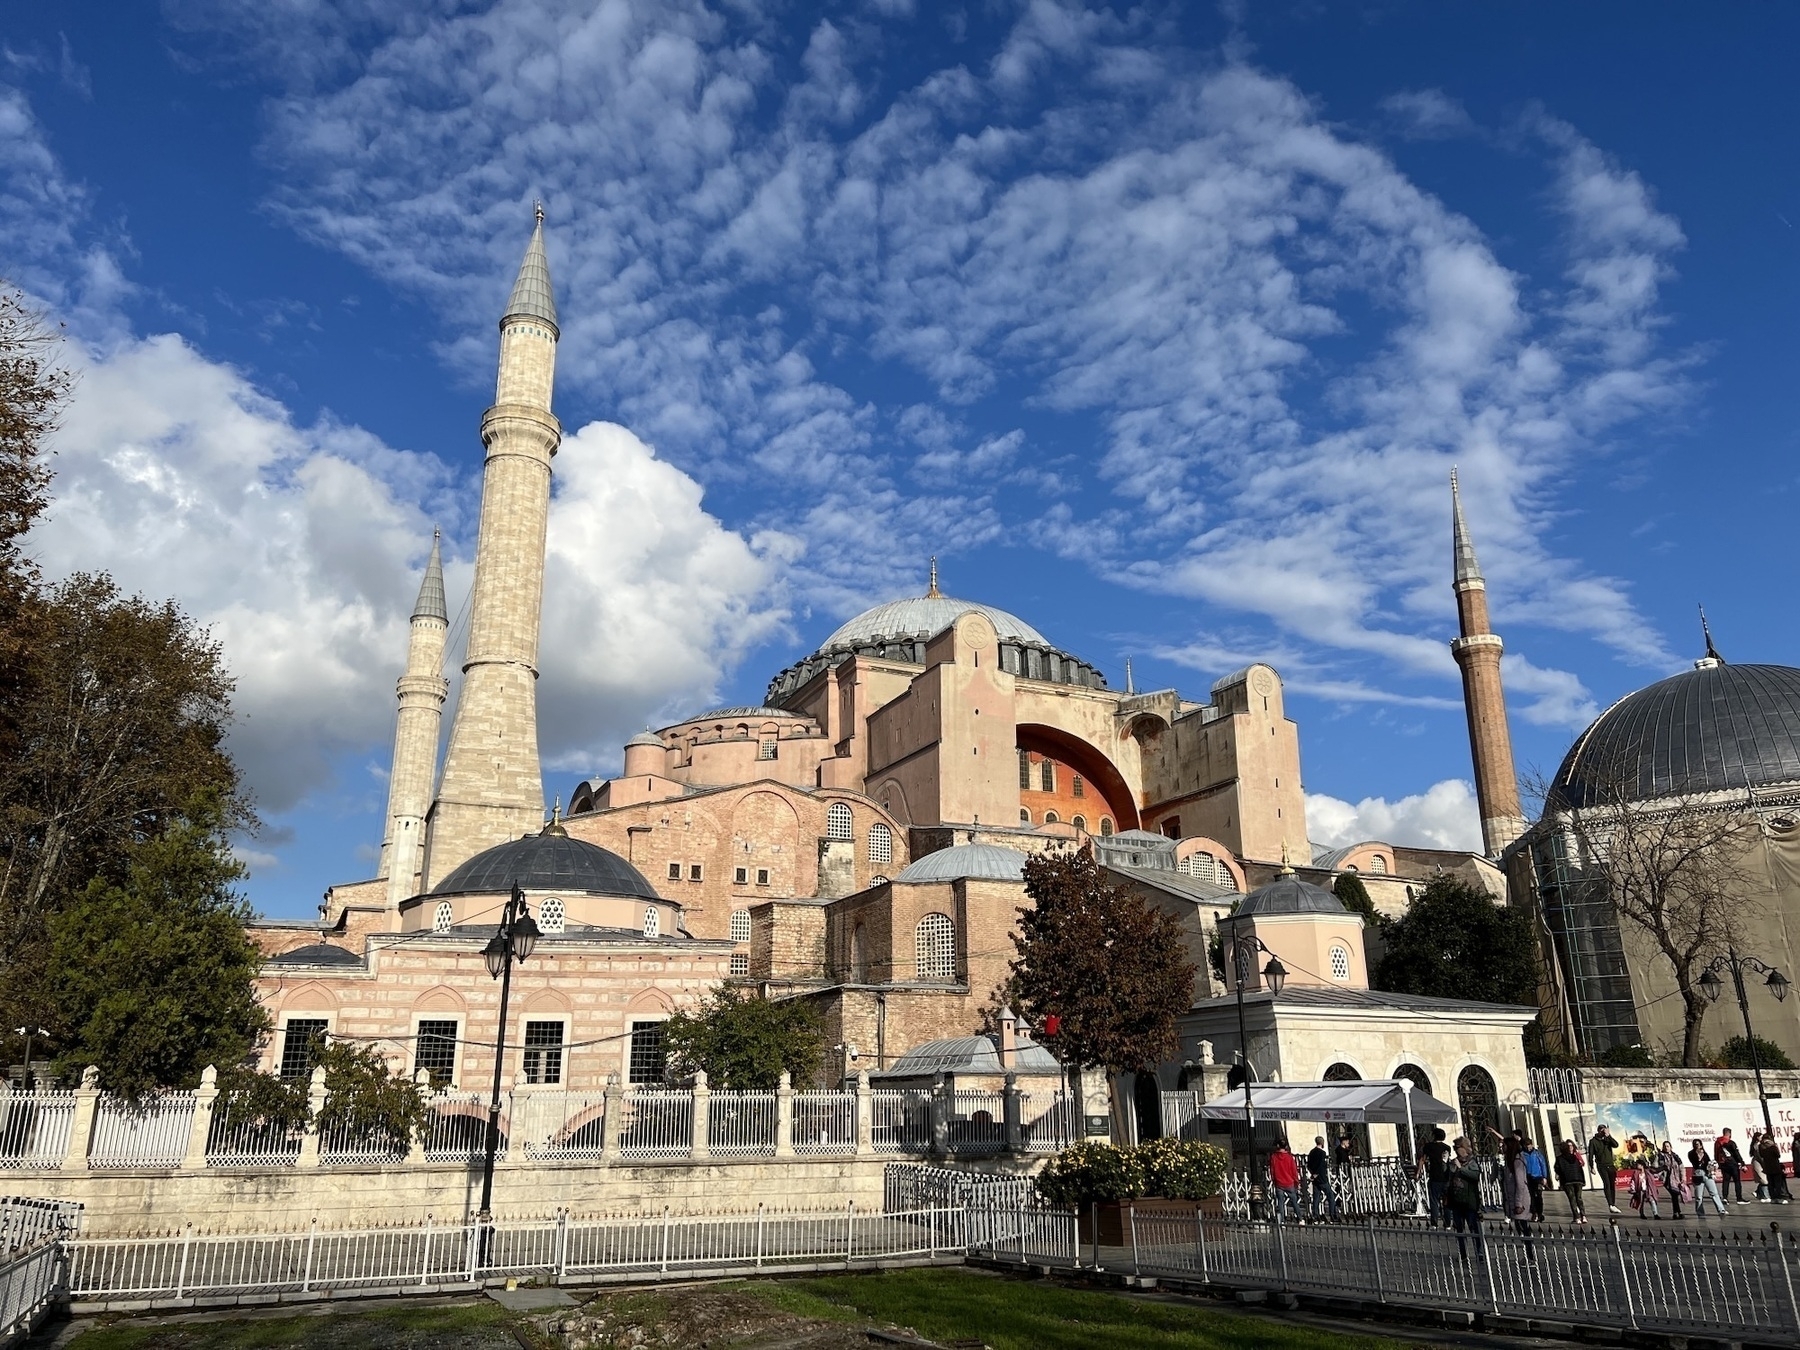 The Hagia Sophia on a sunny day